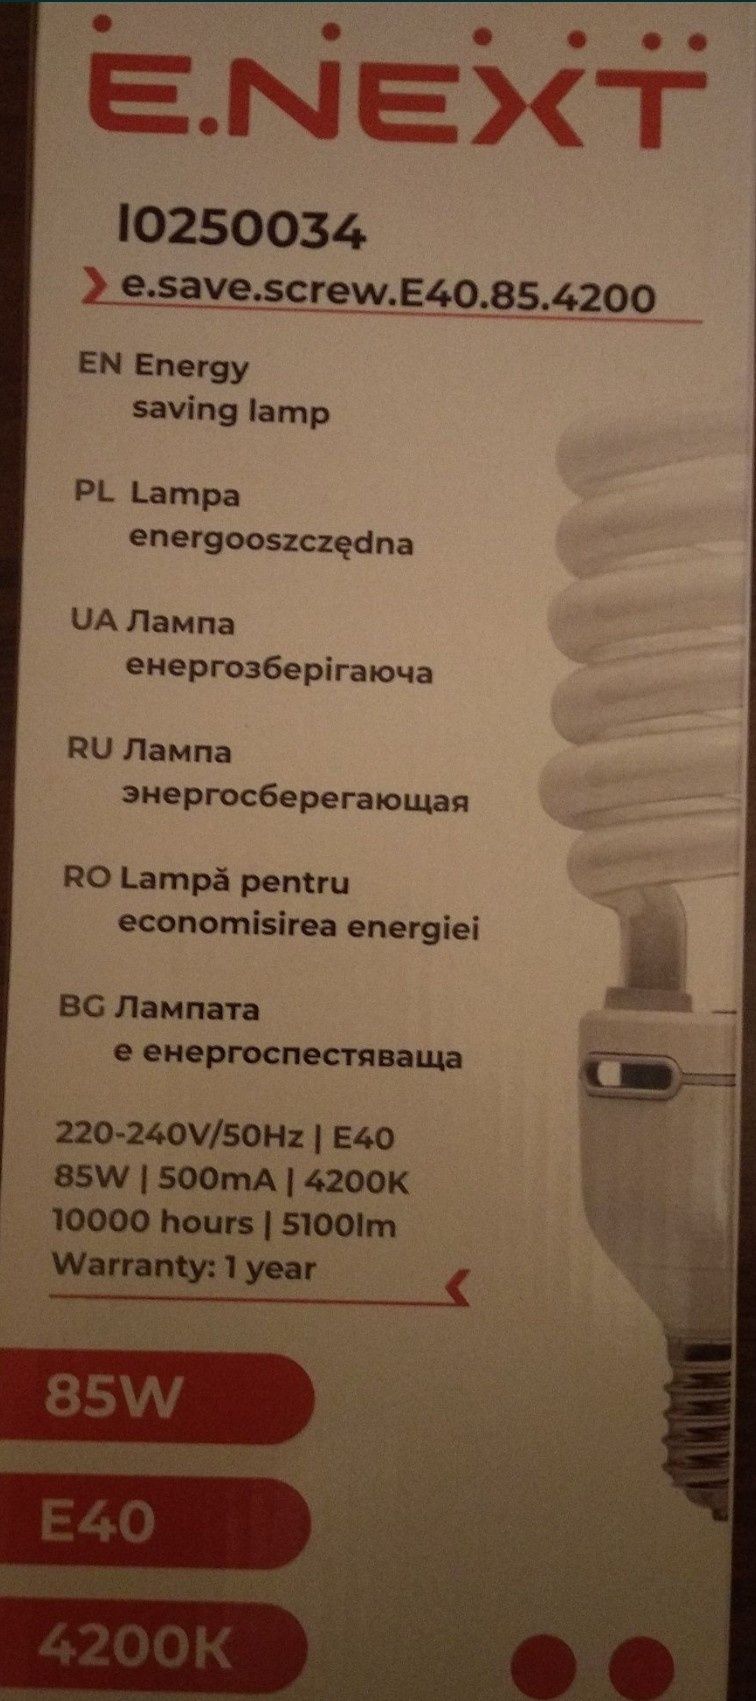 Энергосберегающая лампа Е 40 85 Вт.
-400 грн.